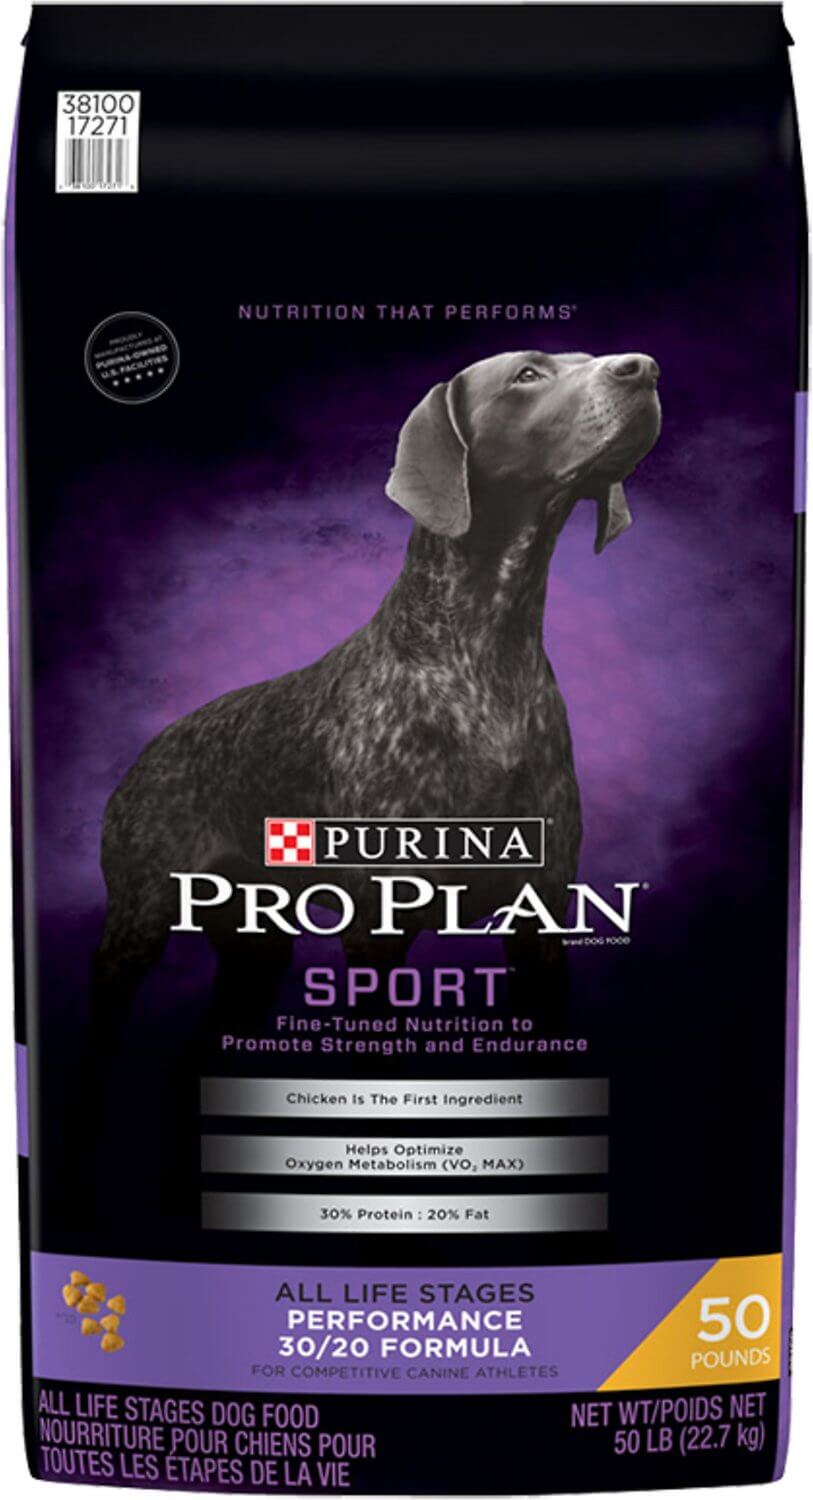 Purina Pro Plan Sport Dog Food Review | Dog Food Advisor